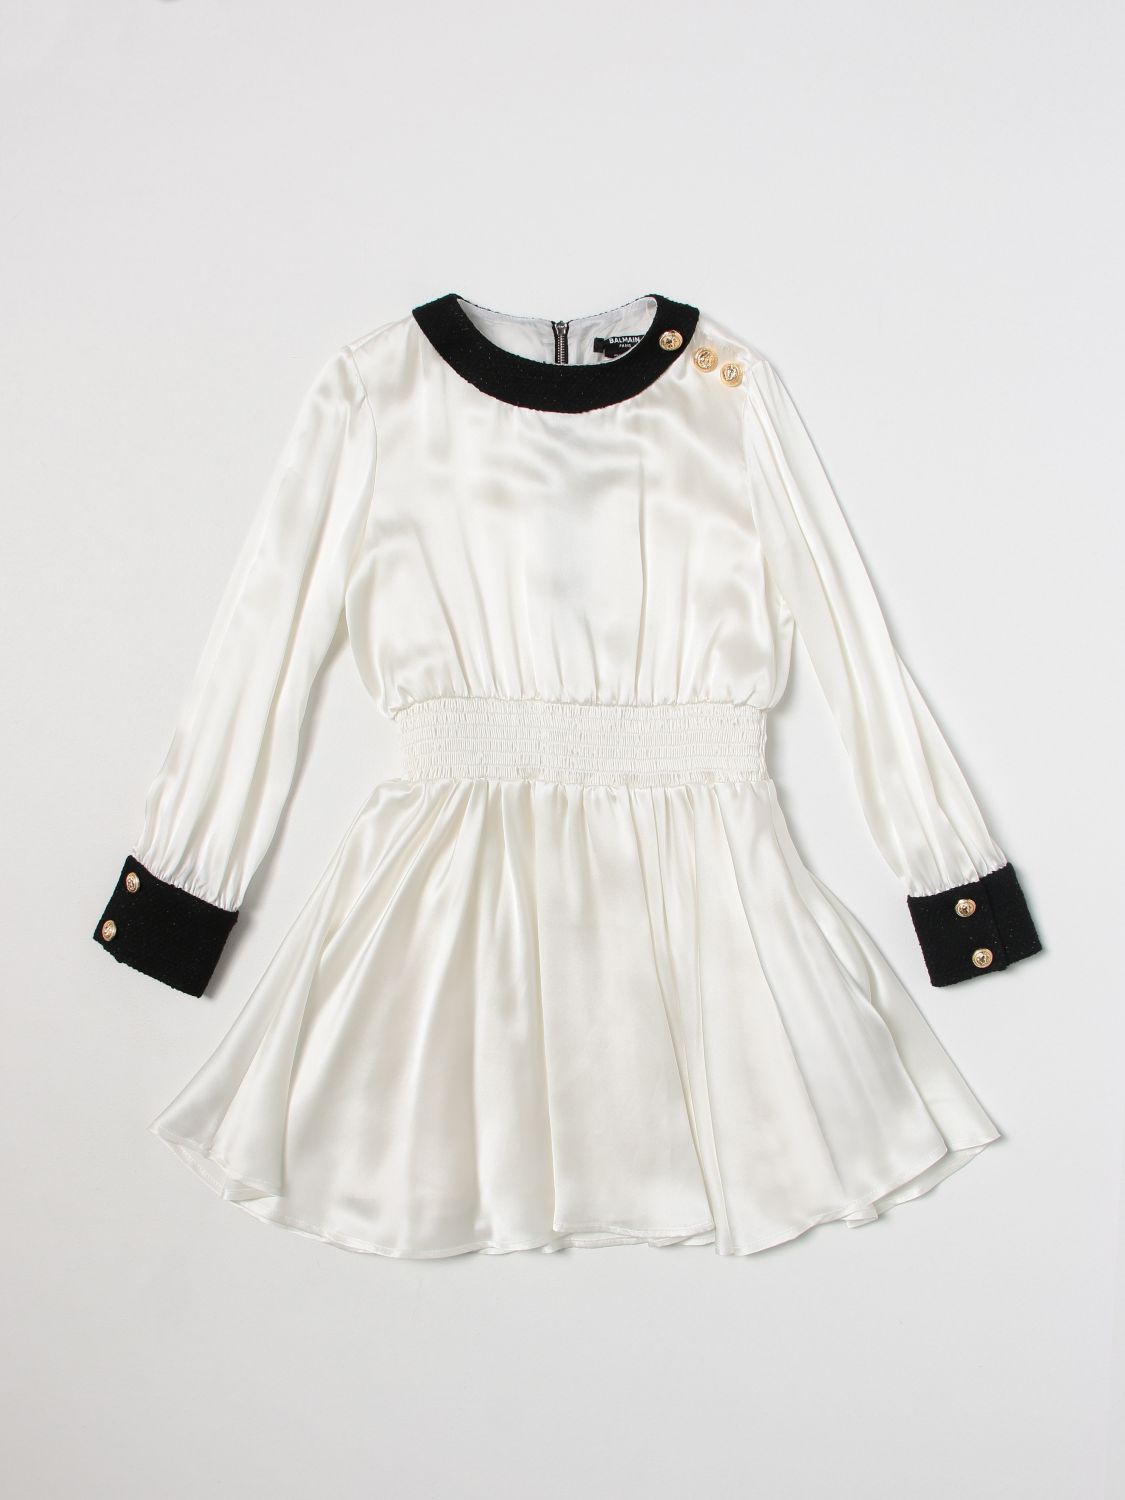 BALMAIN KIDS: dress for girls - Ivory | Balmain Kids dress BS1B30K0108 online on